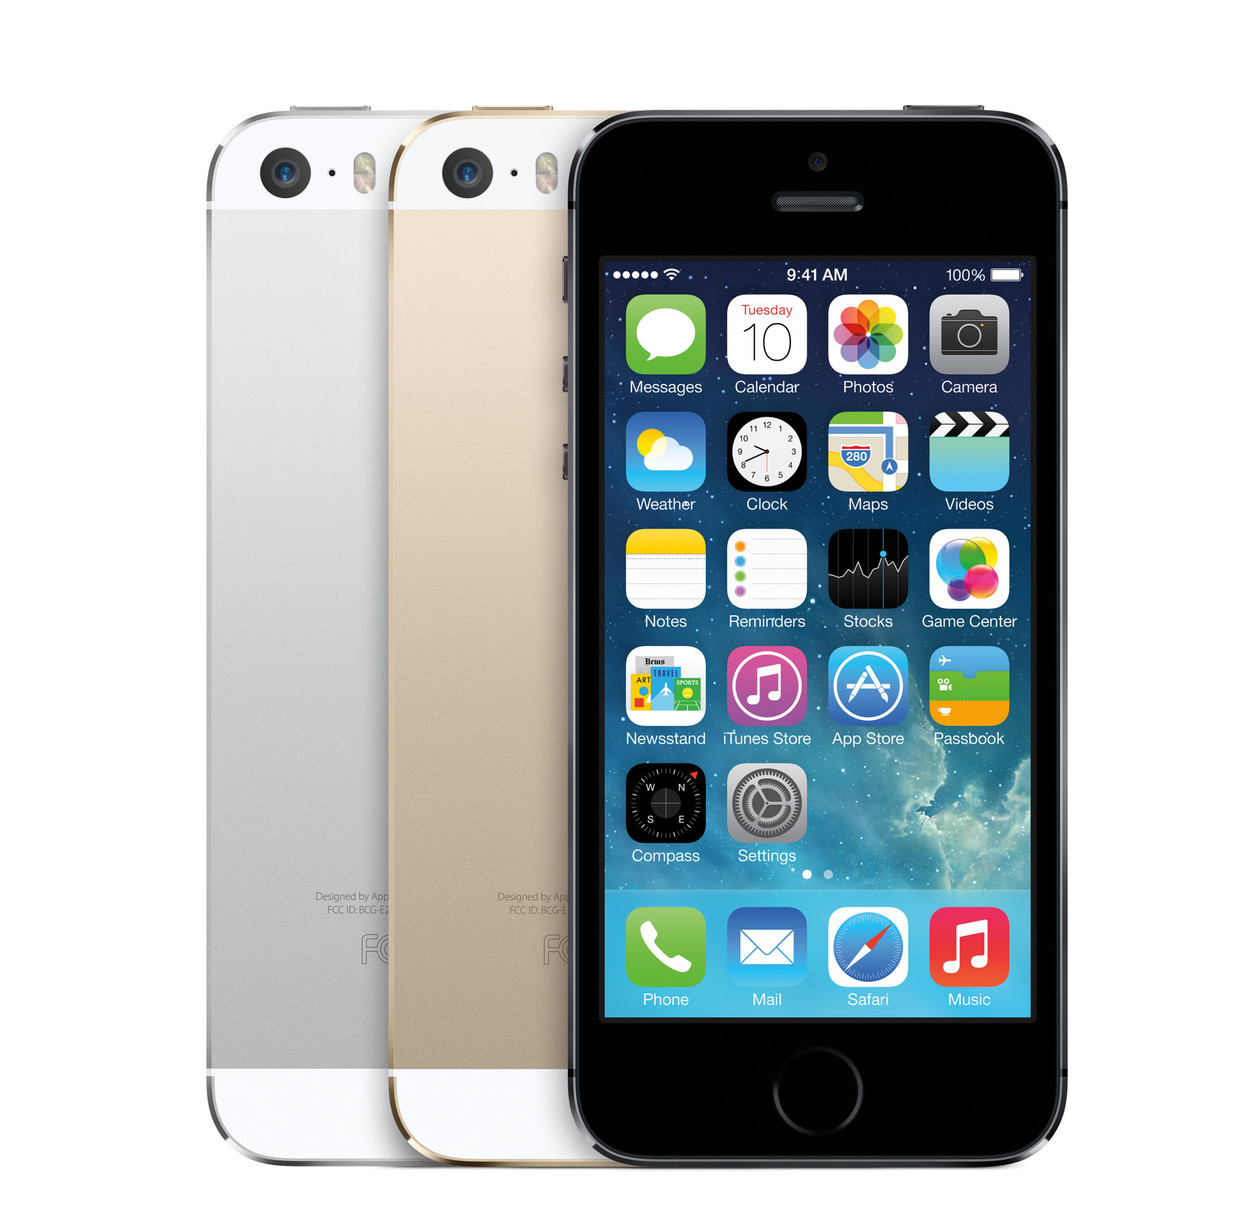 Apple iPhone 5s   Wireless Communications